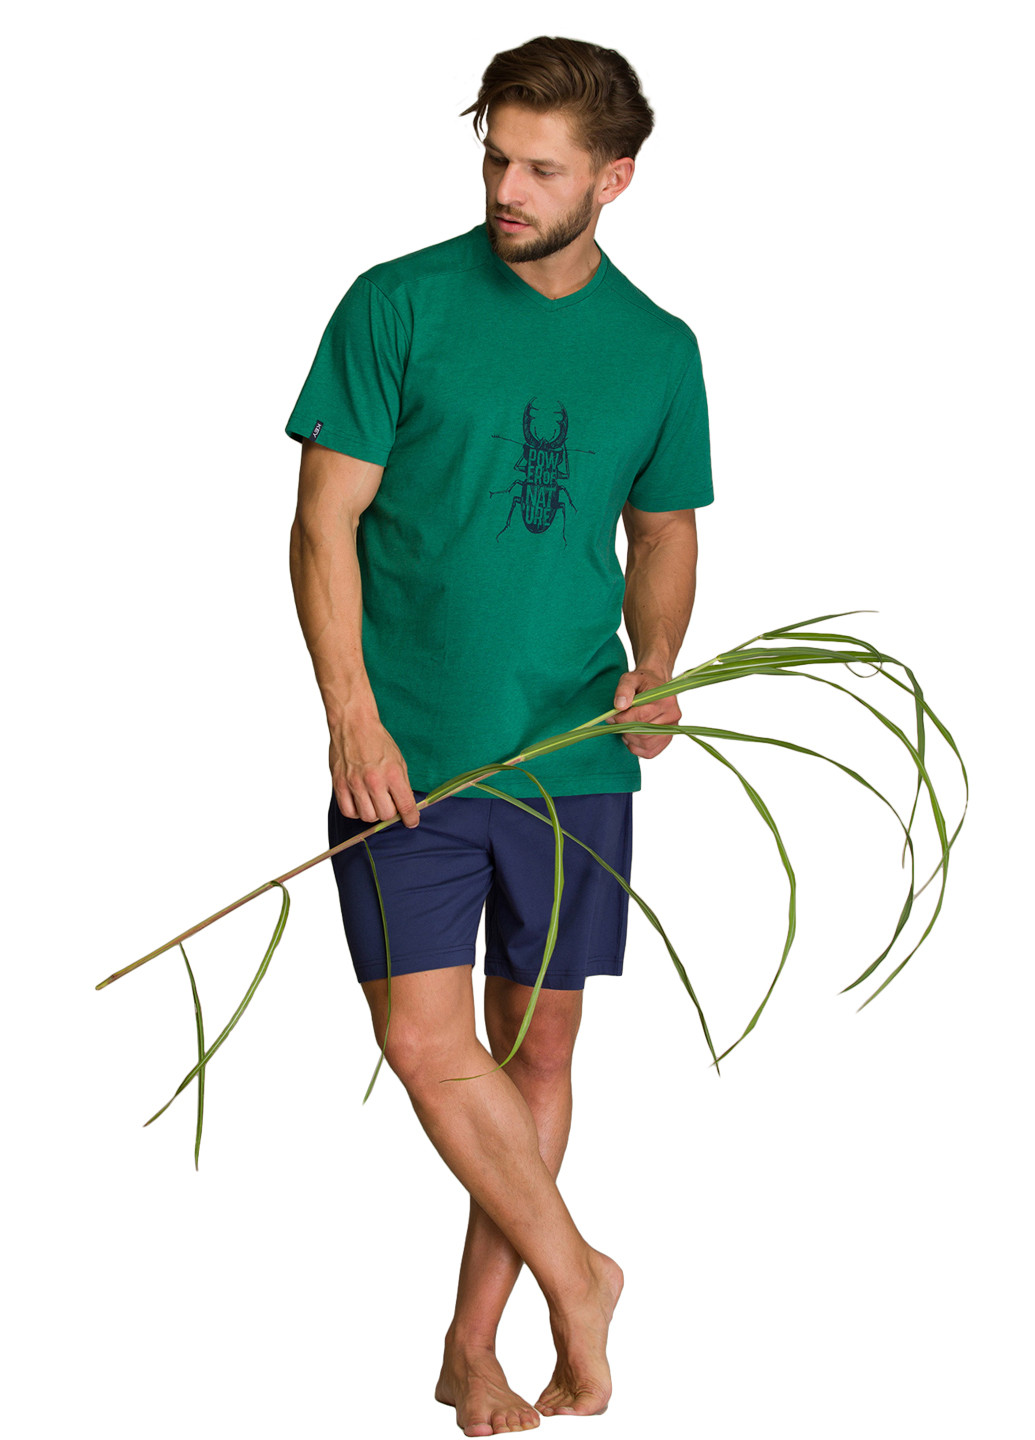 Пижама (футболка, шорты) Key футболка + шорты рисунок зелёная домашняя трикотаж, хлопок